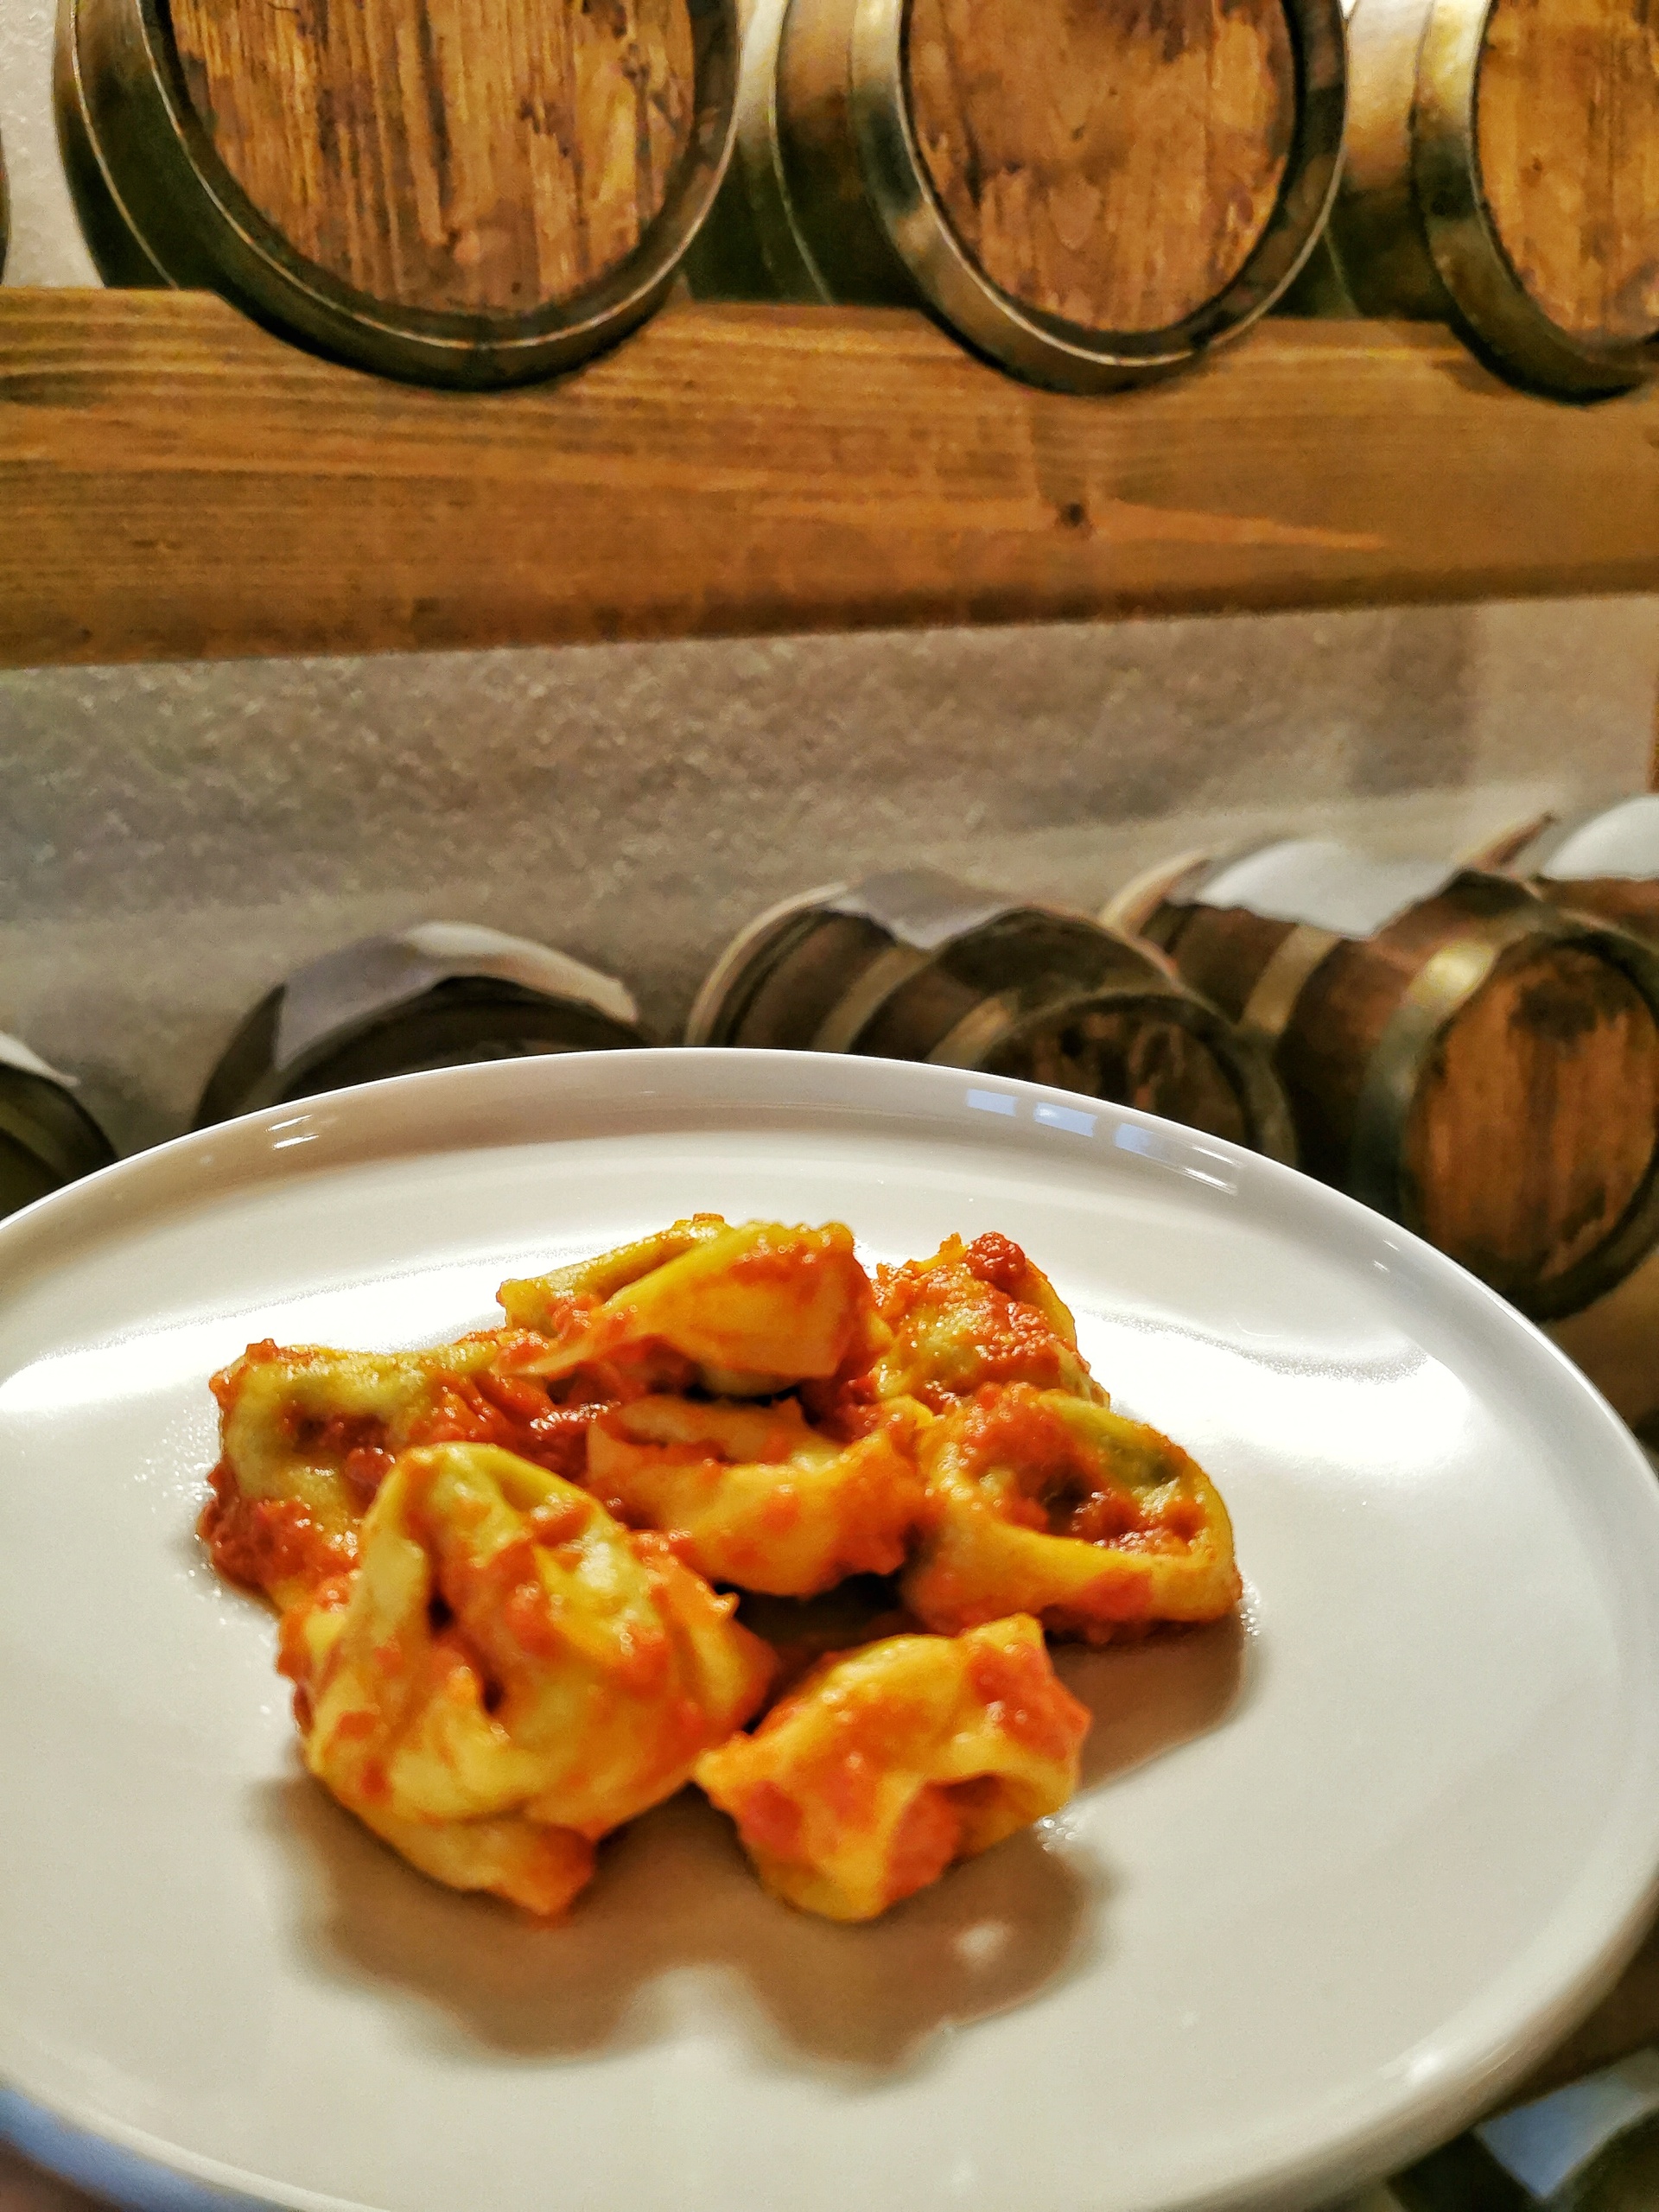 Balsamic Vinegar Tasting and Cooking Lesson in Small Group - Acomodações em Maranello